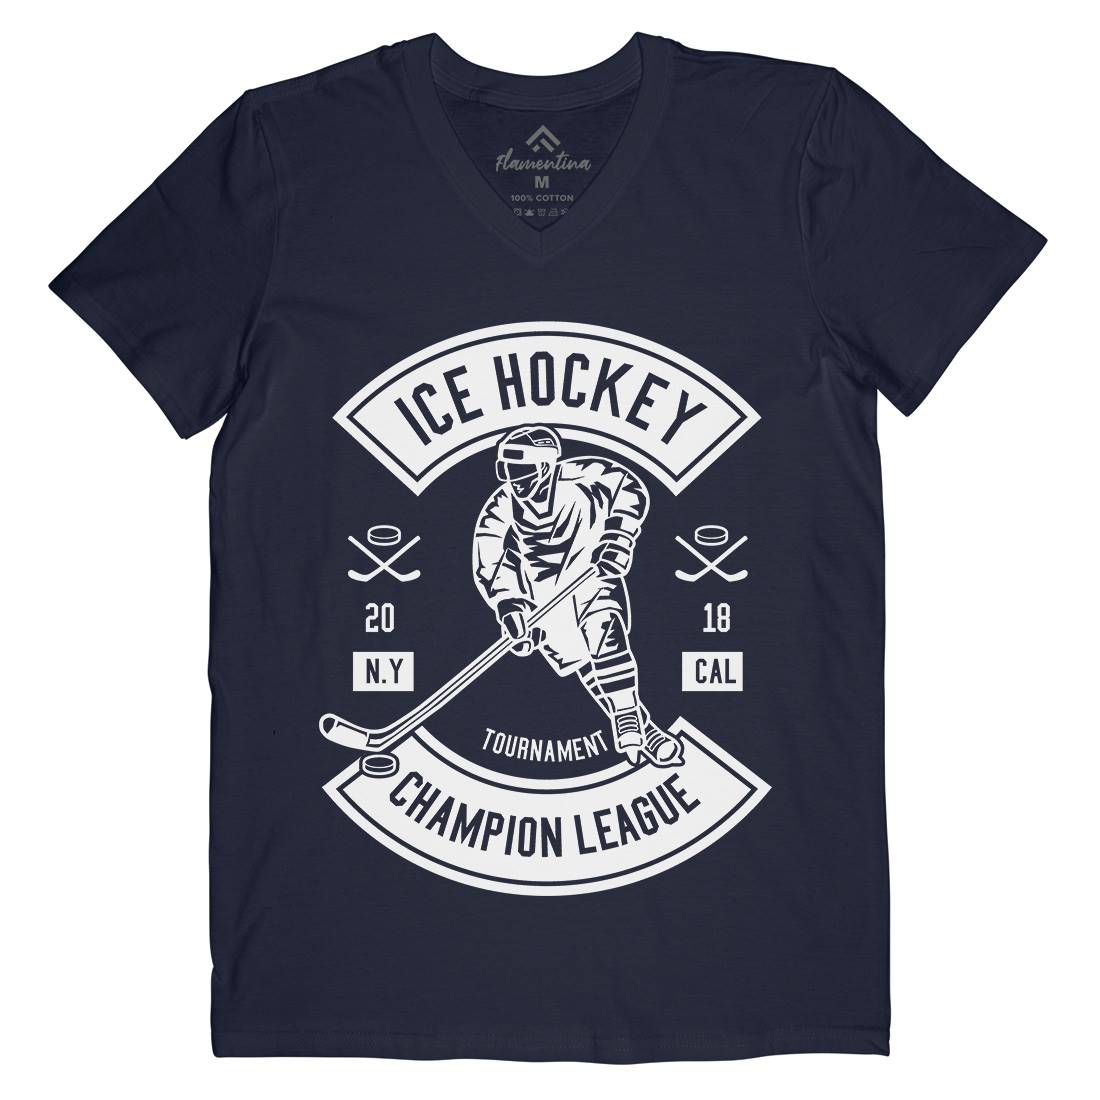 Ice Hockey Champion League Mens Organic V-Neck T-Shirt Sport B564